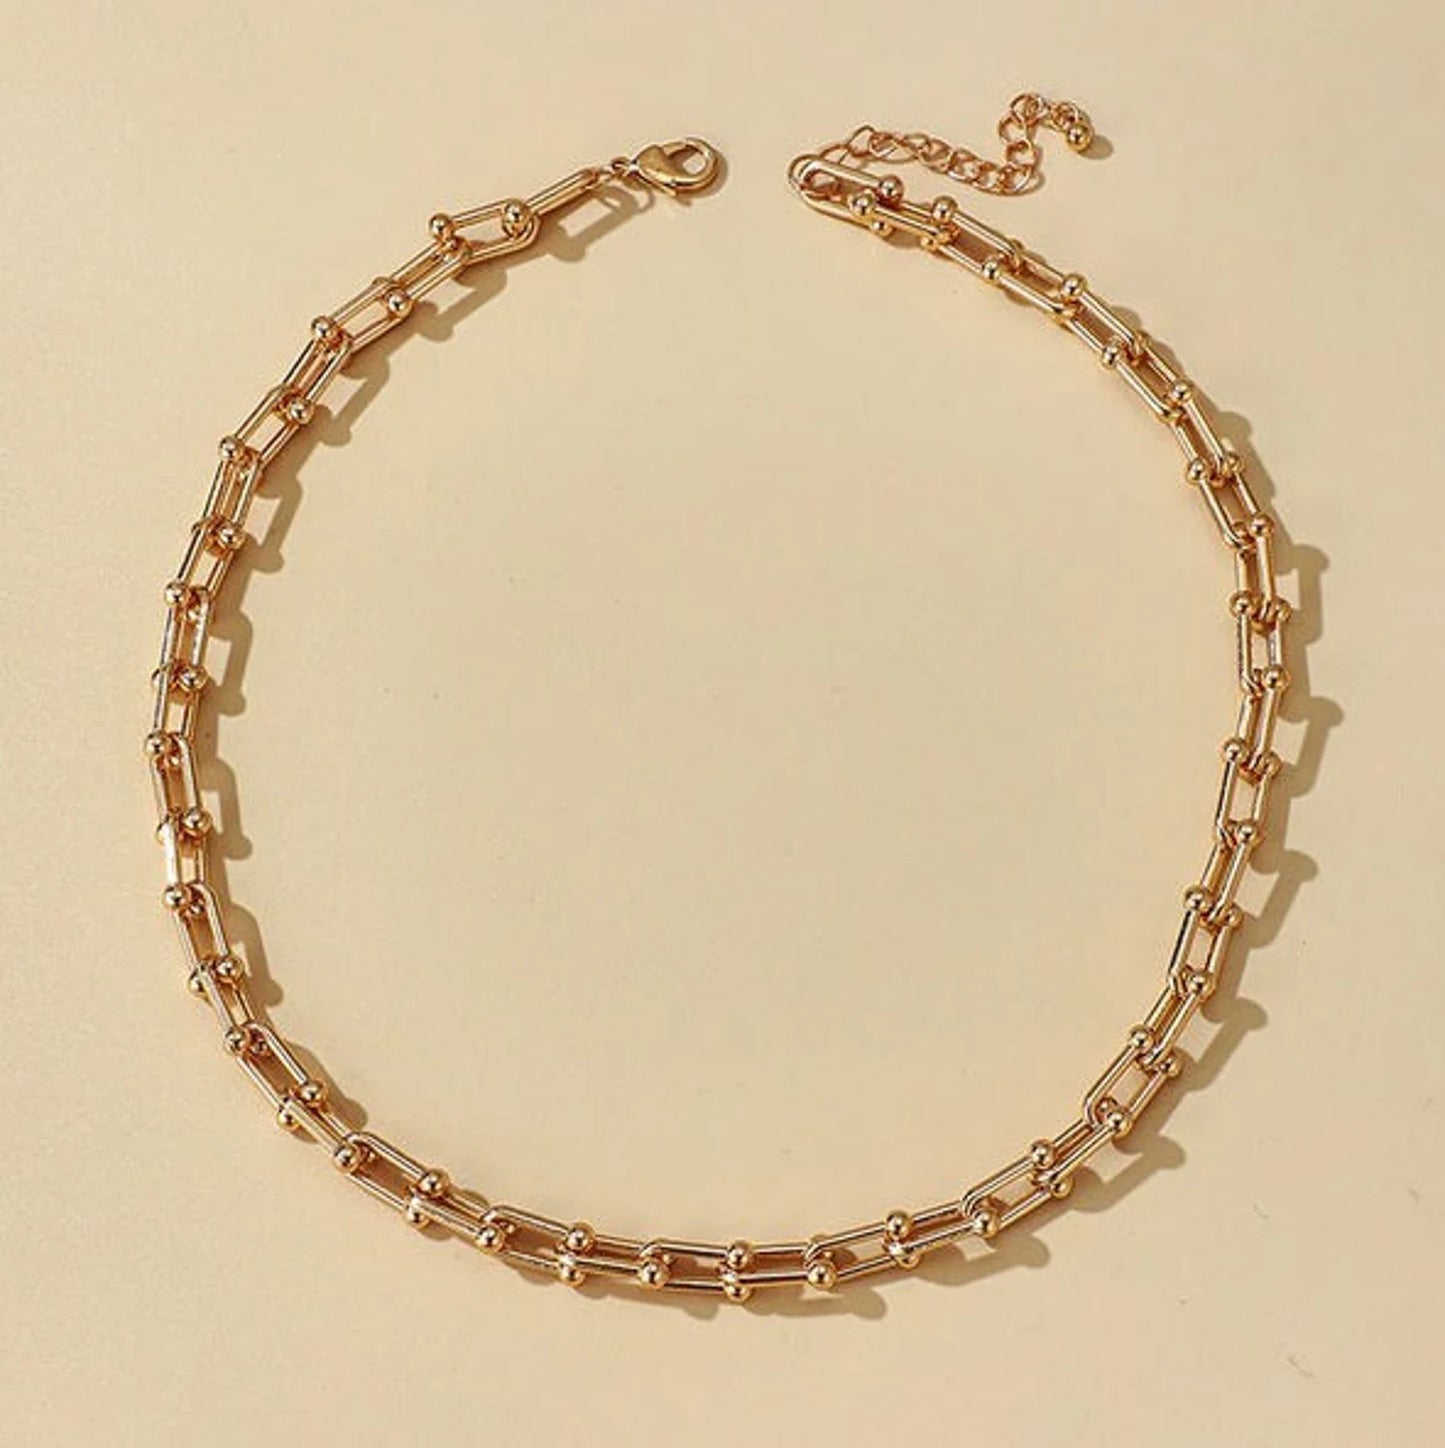 Uni Chain Necklace